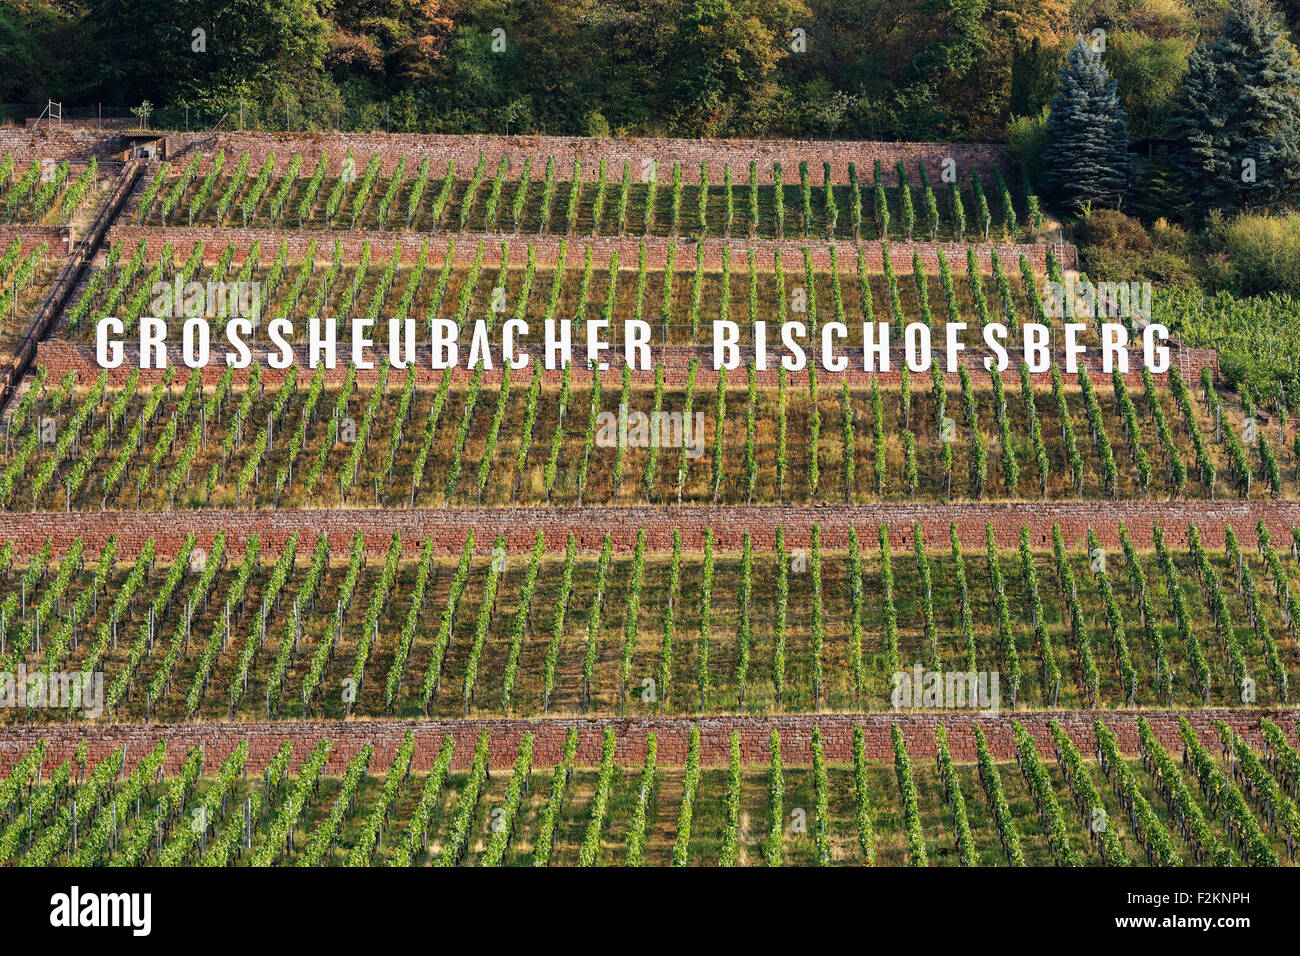 Vineyard Großheubacher Bischofsberg, Großheubach, Spessart, Lower Franconia, Franconia, Bavaria, Germany Stock Photo